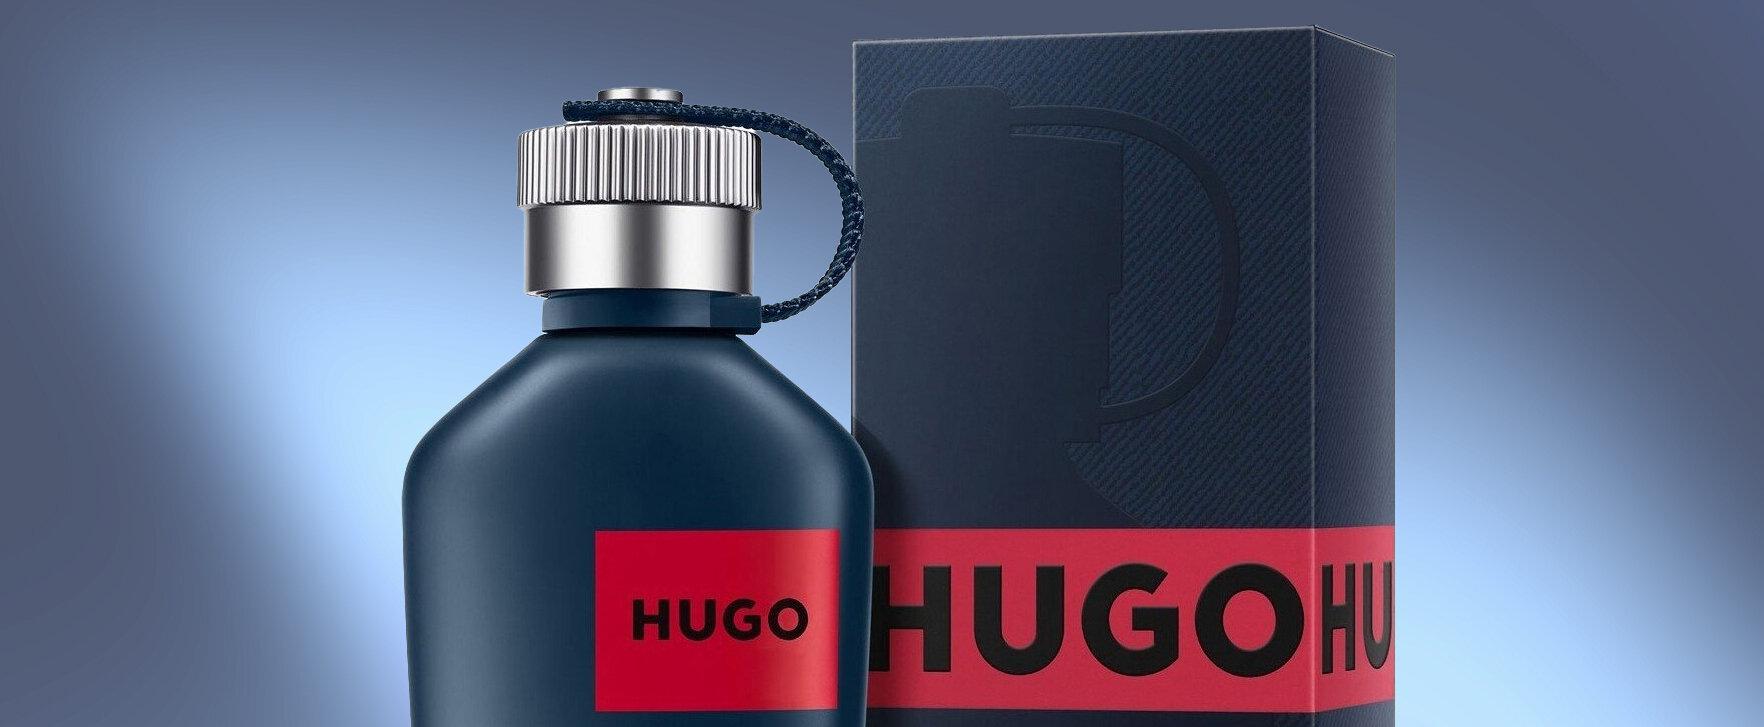 “Hugo Jeans” - The New Men’s Fragrance by Hugo Boss, Inspired by Classic Denim Clothing